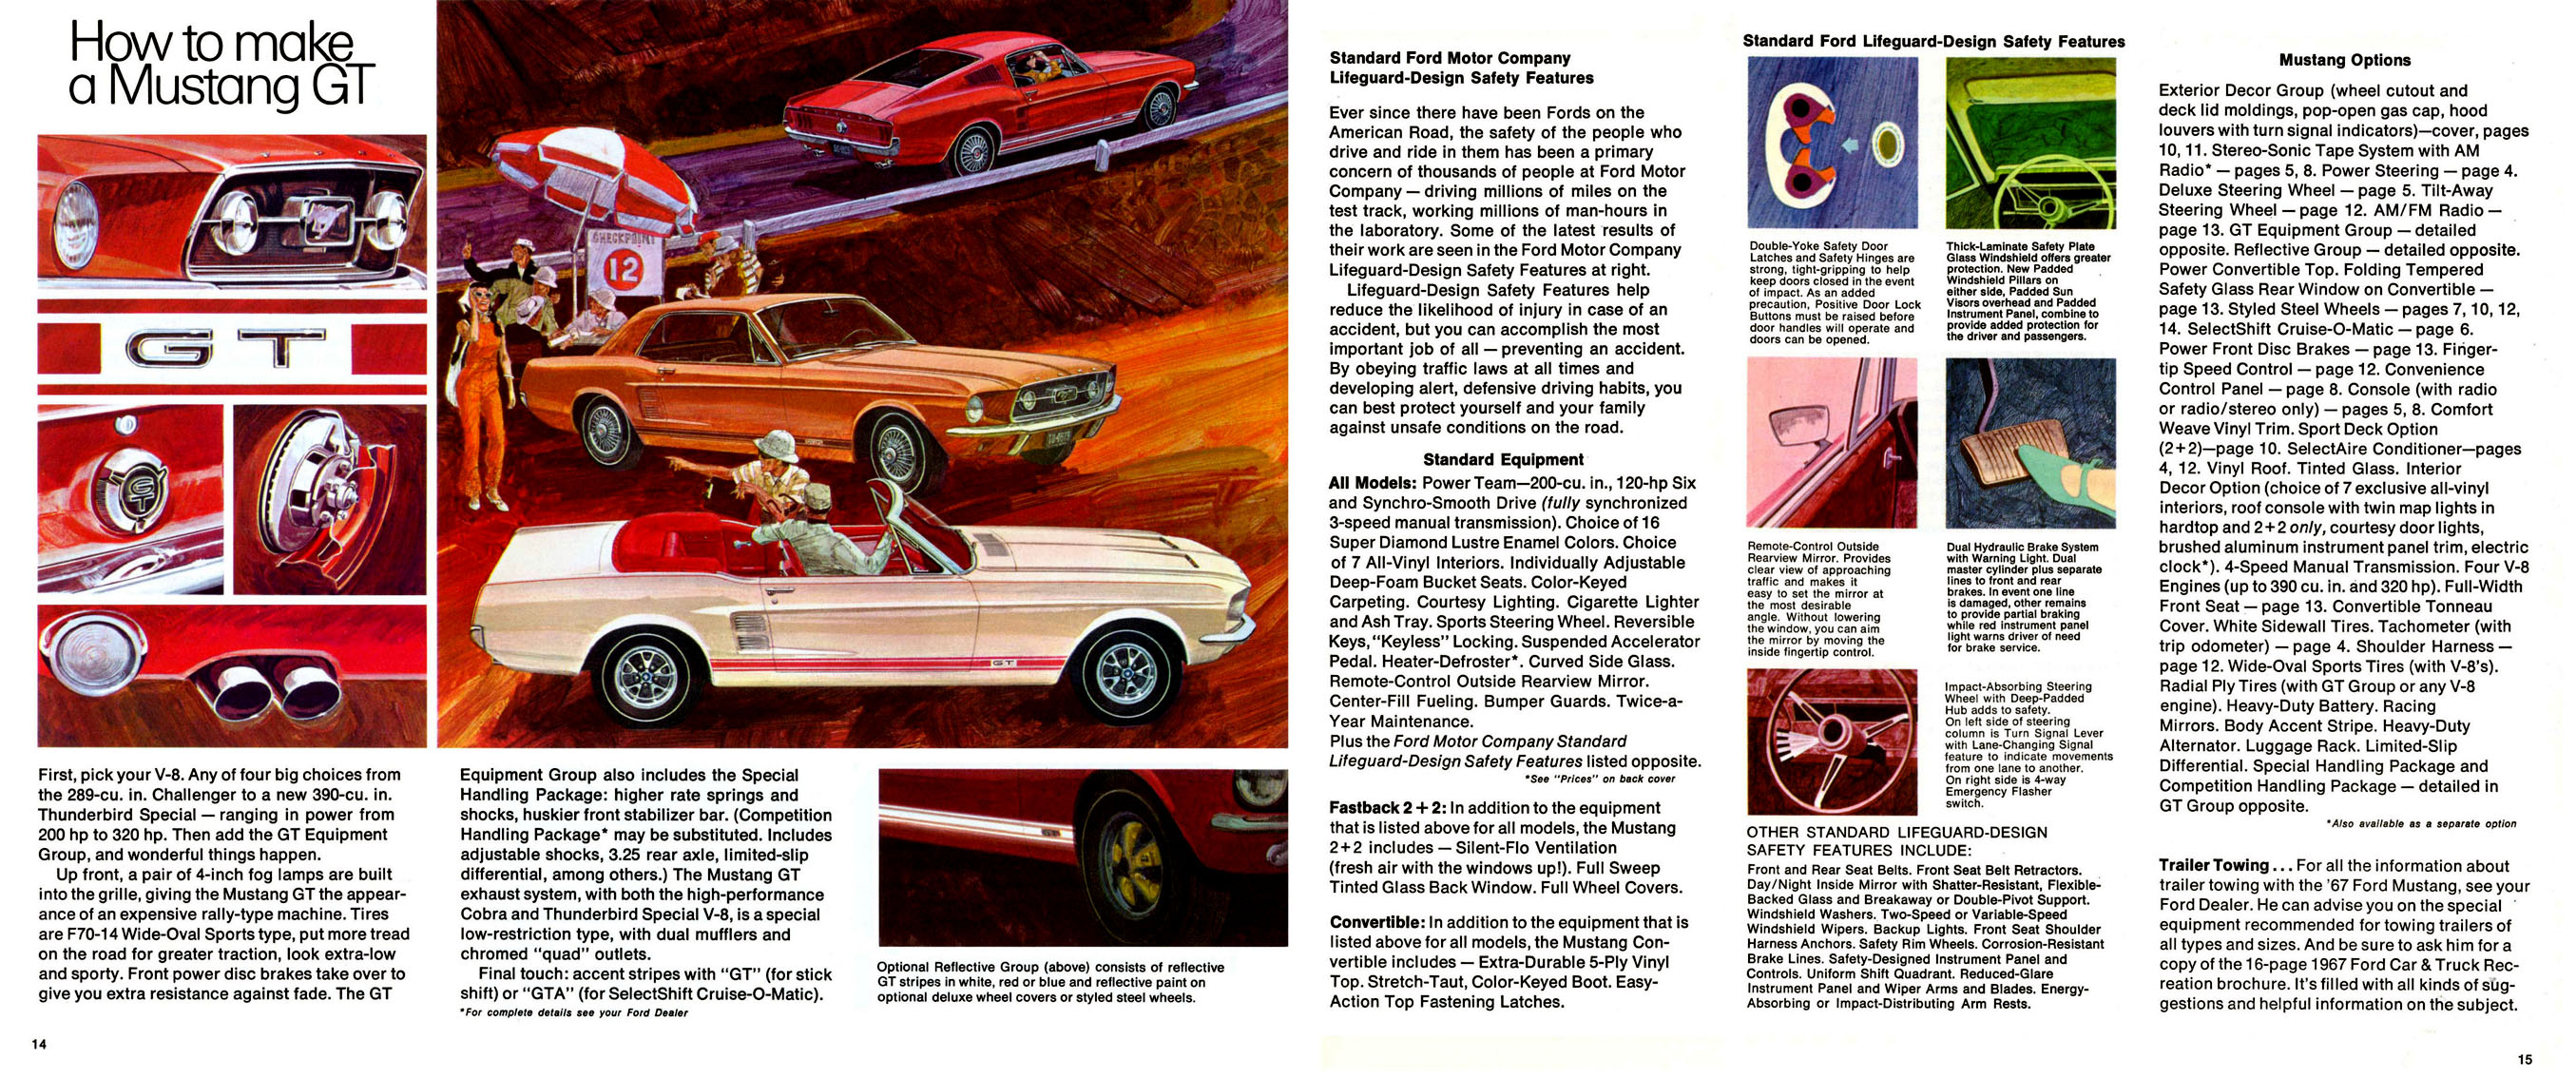 1967 Mustang Prospekt Page 12-13